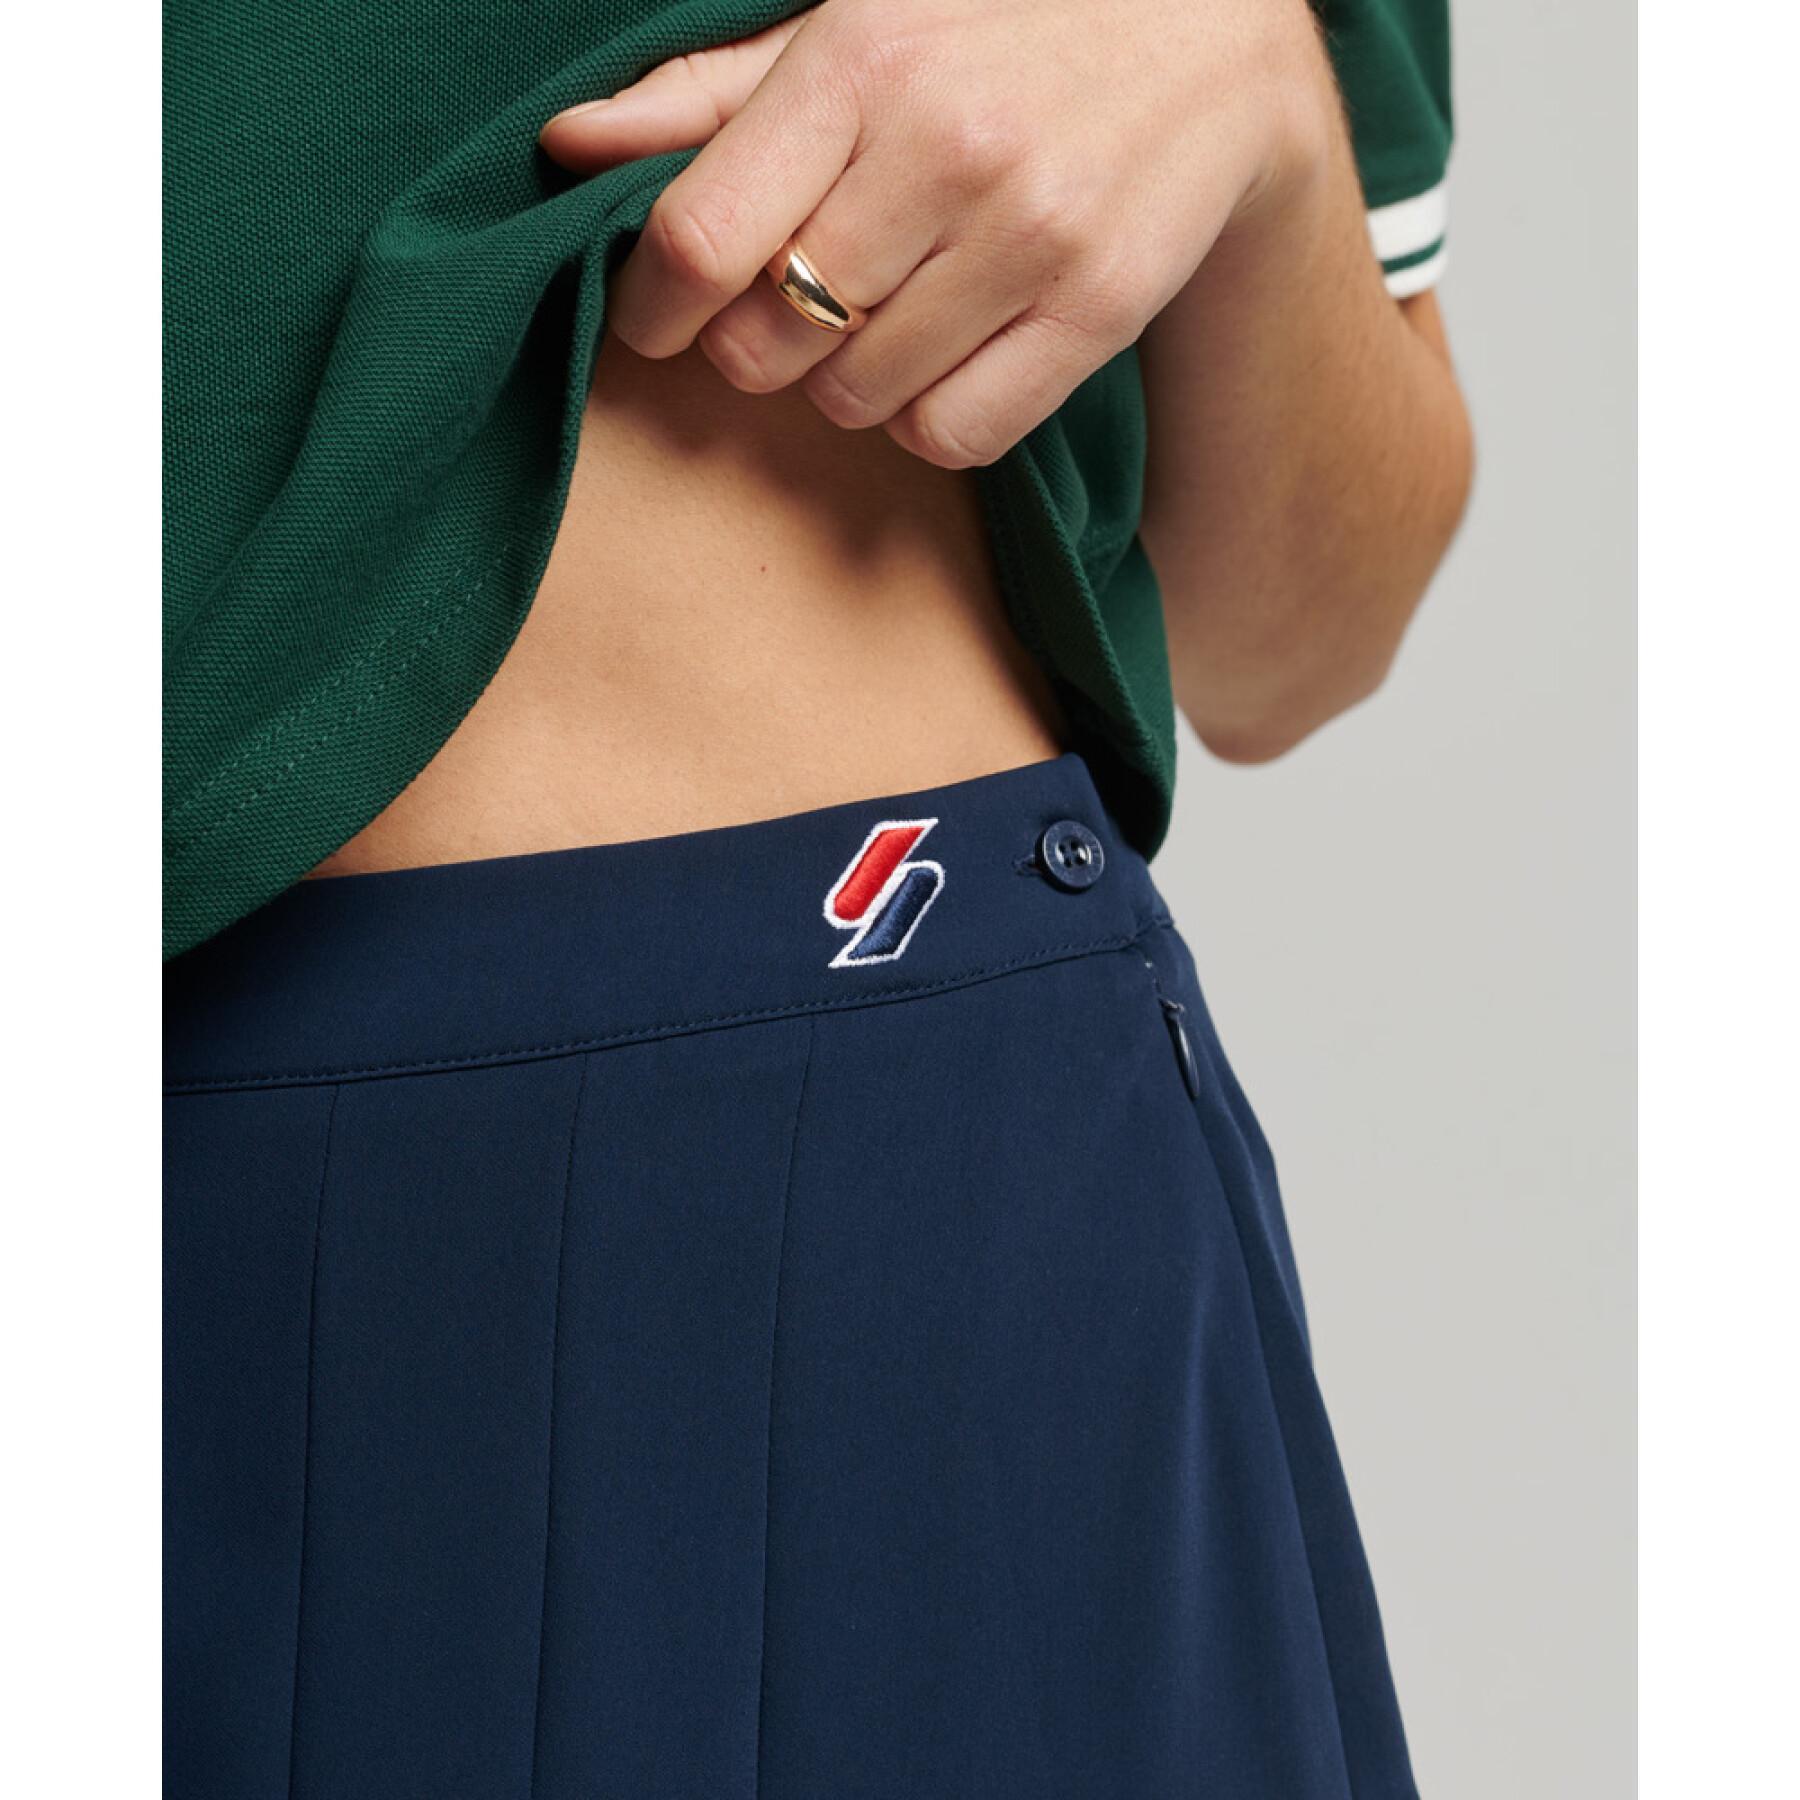 Women's skirt Superdry Essential